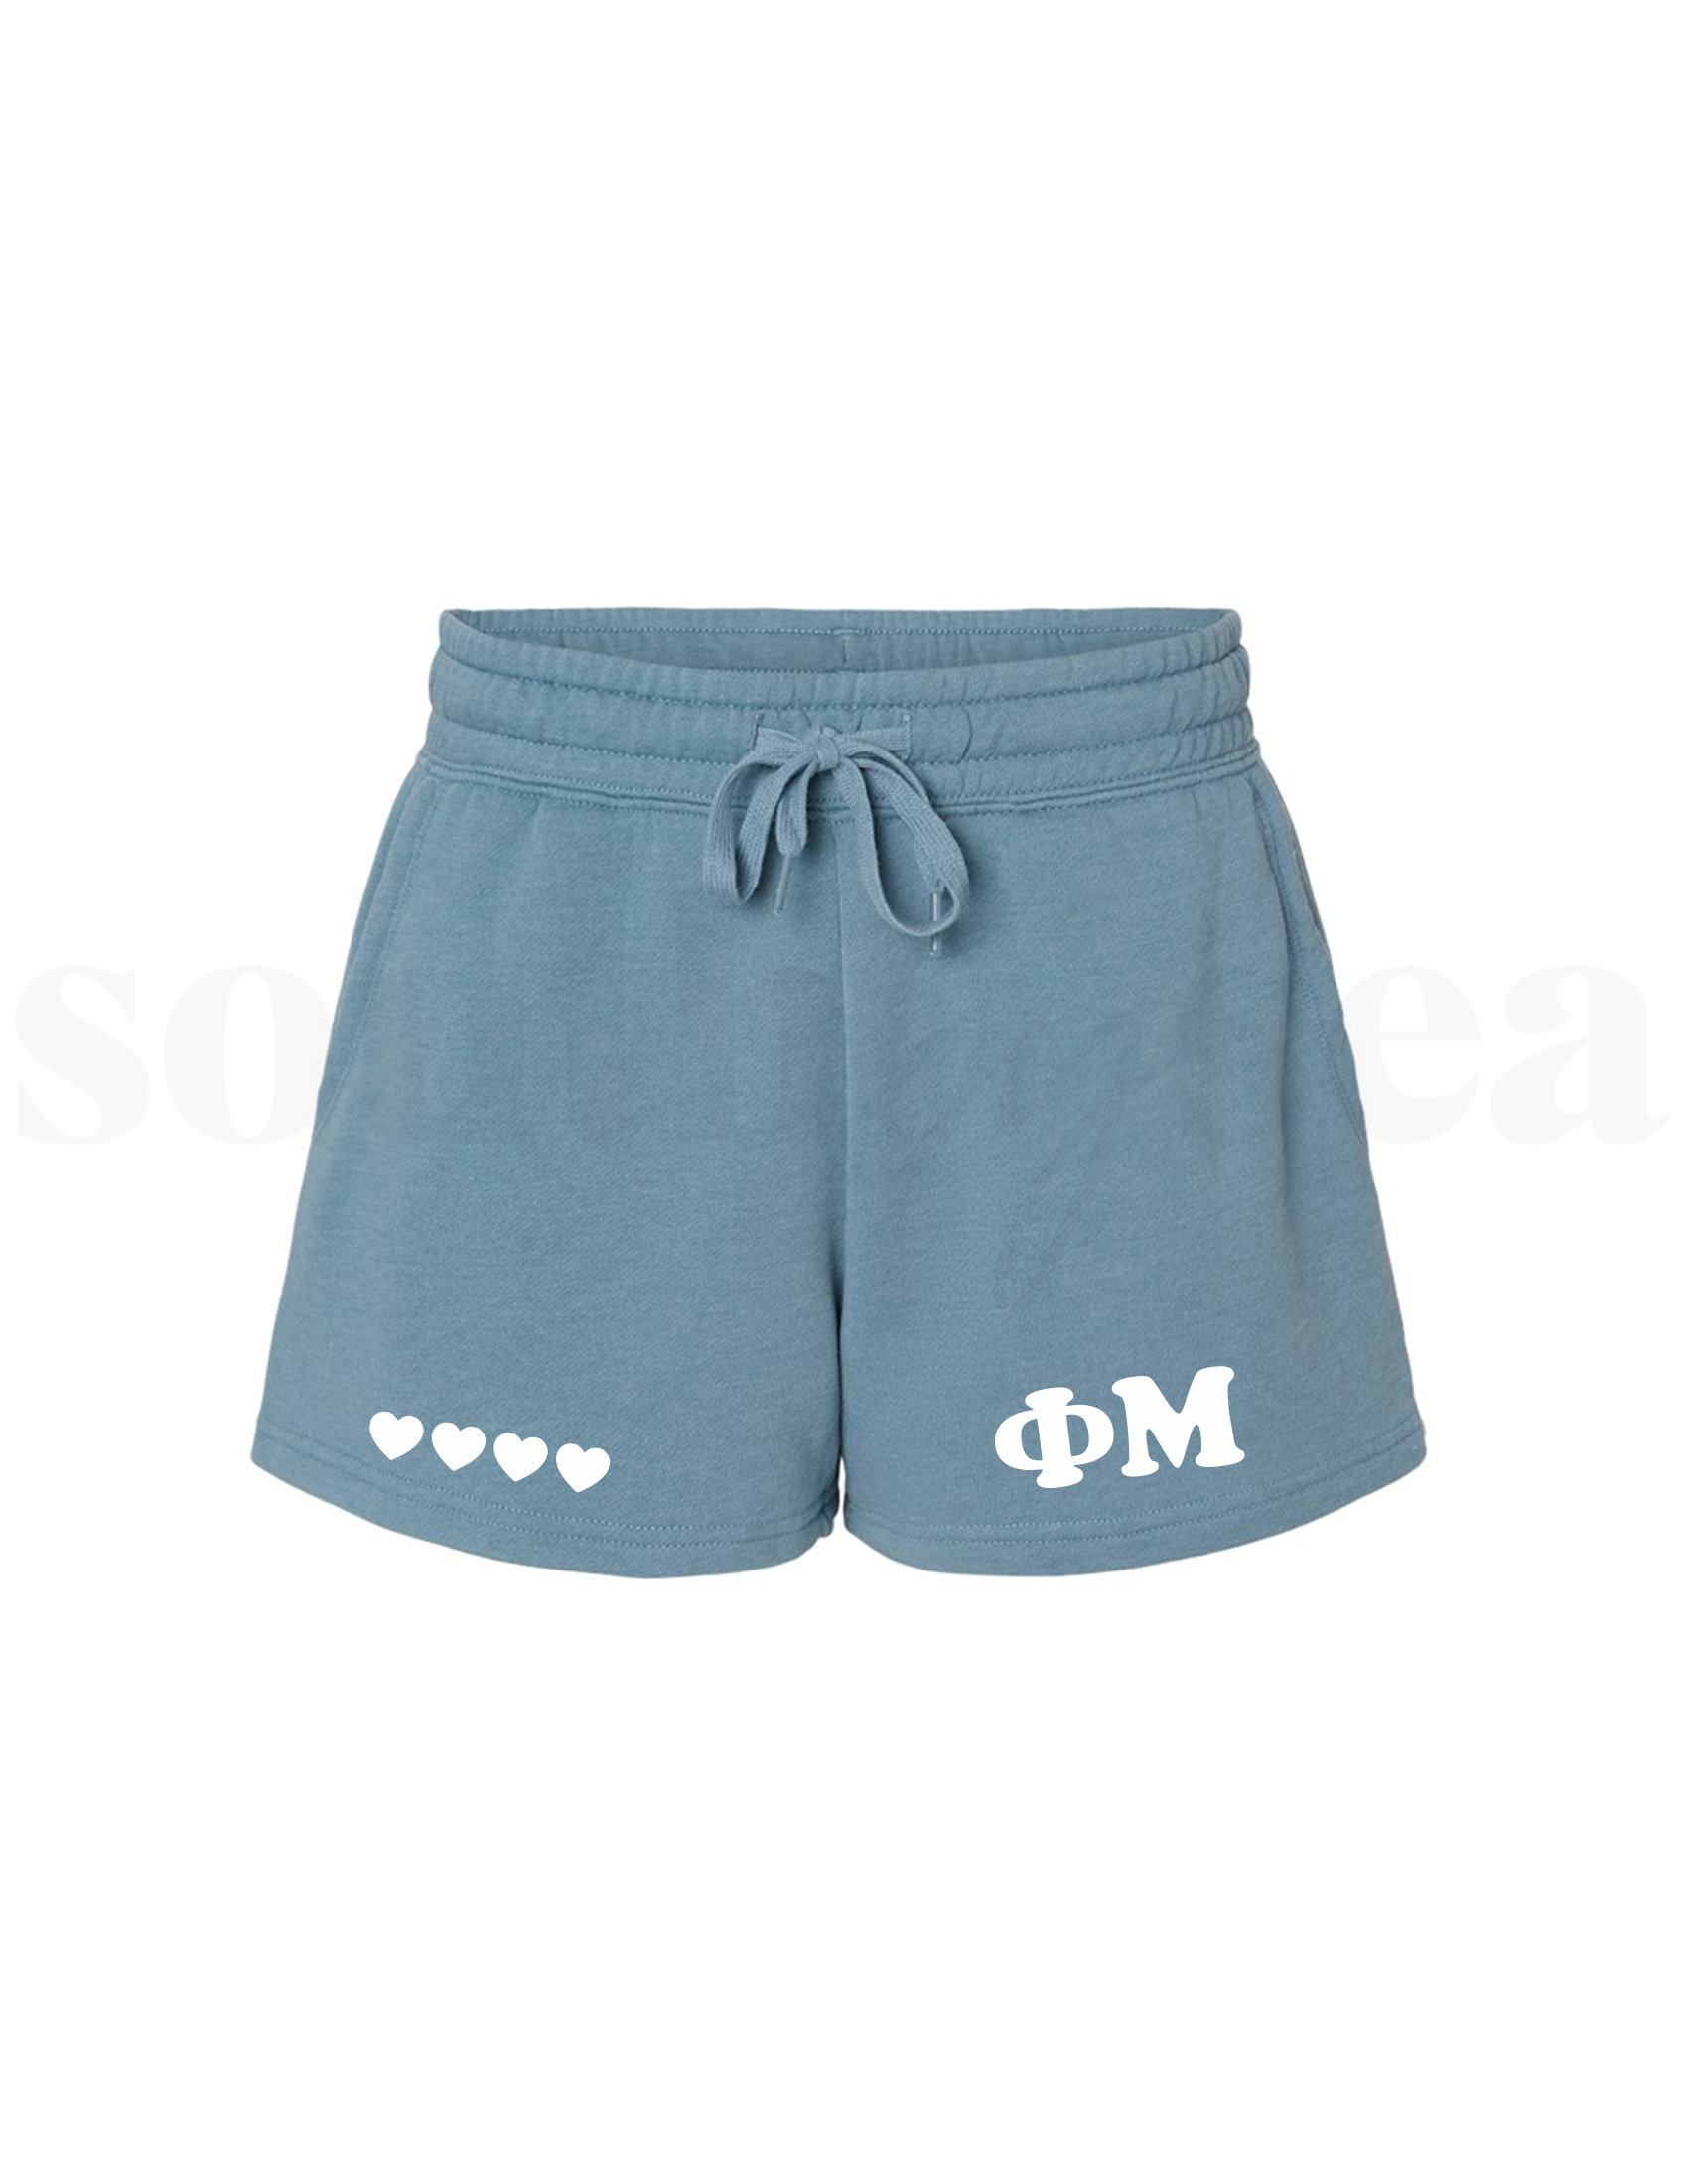 Phi Mu Misty Blue Shorts